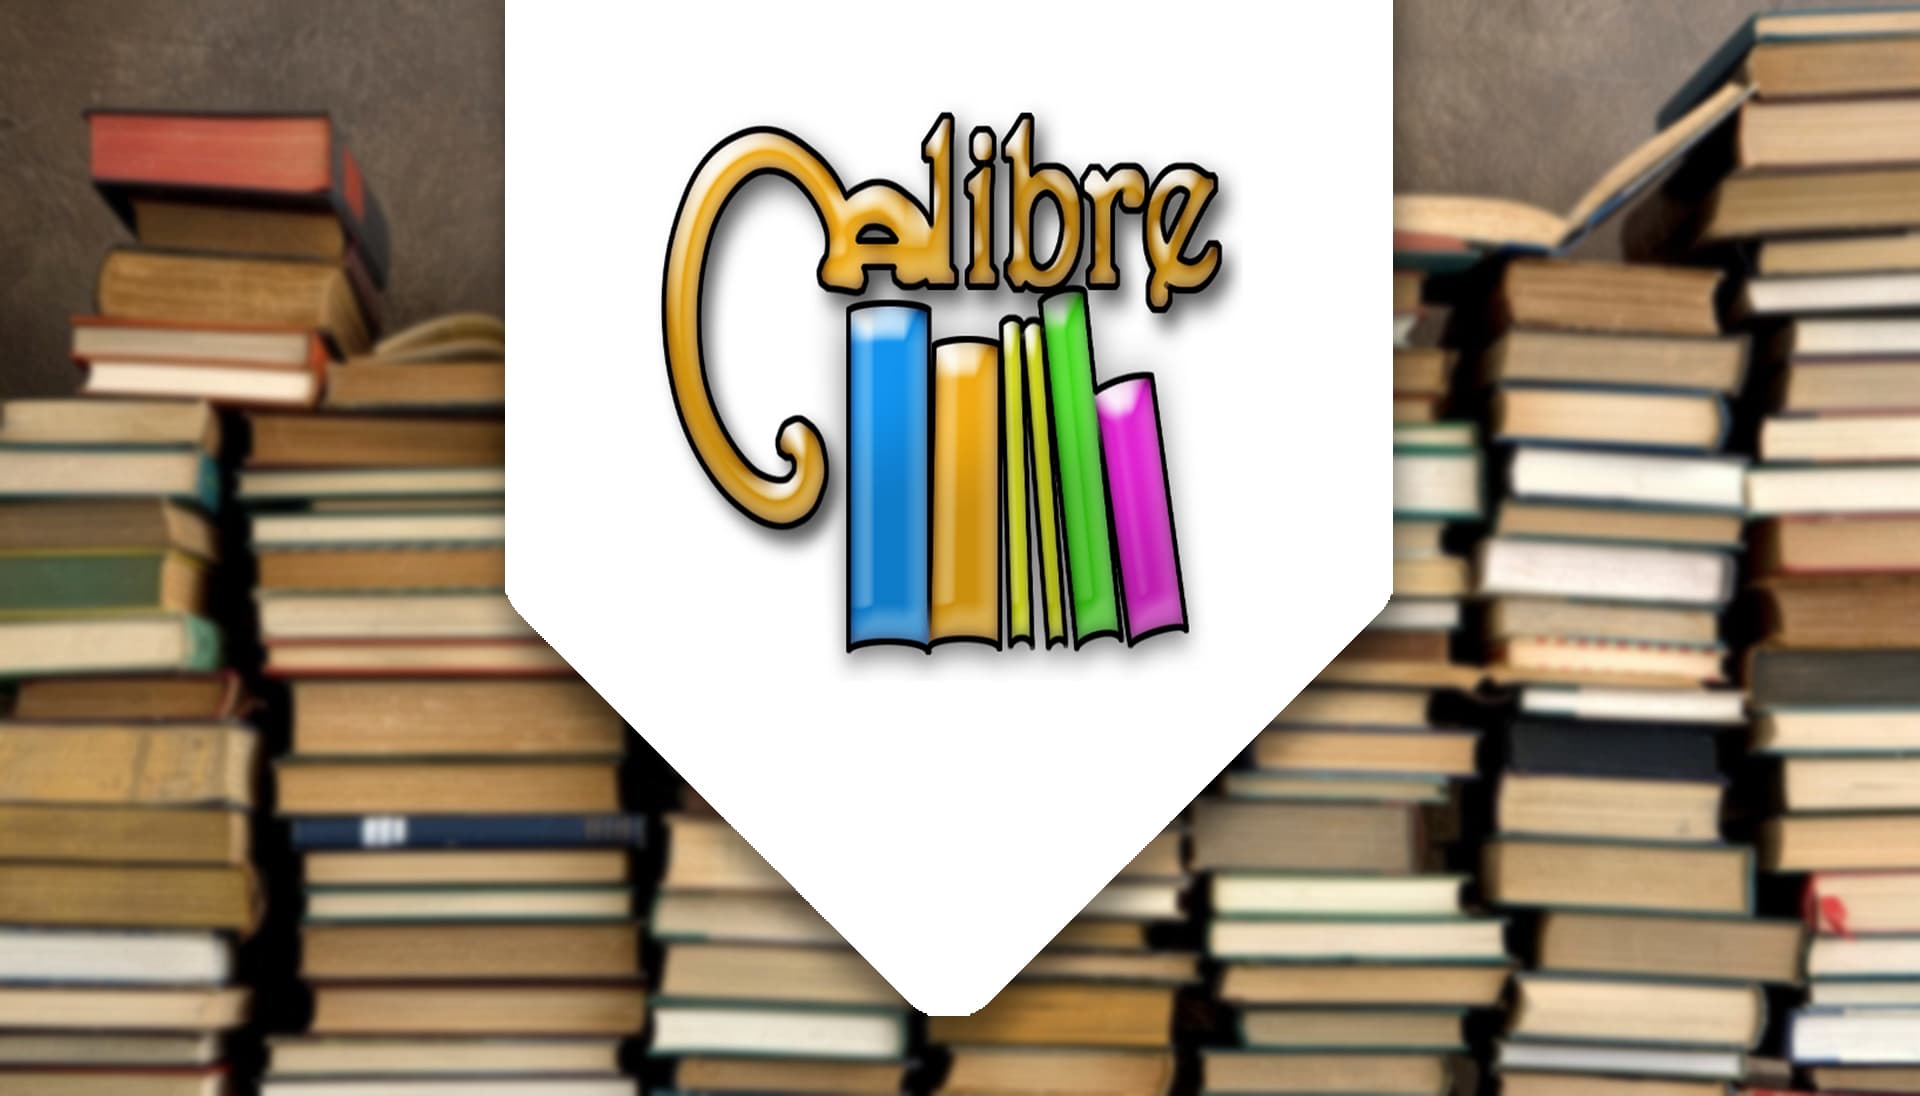 Je e-books beheren met Calibre